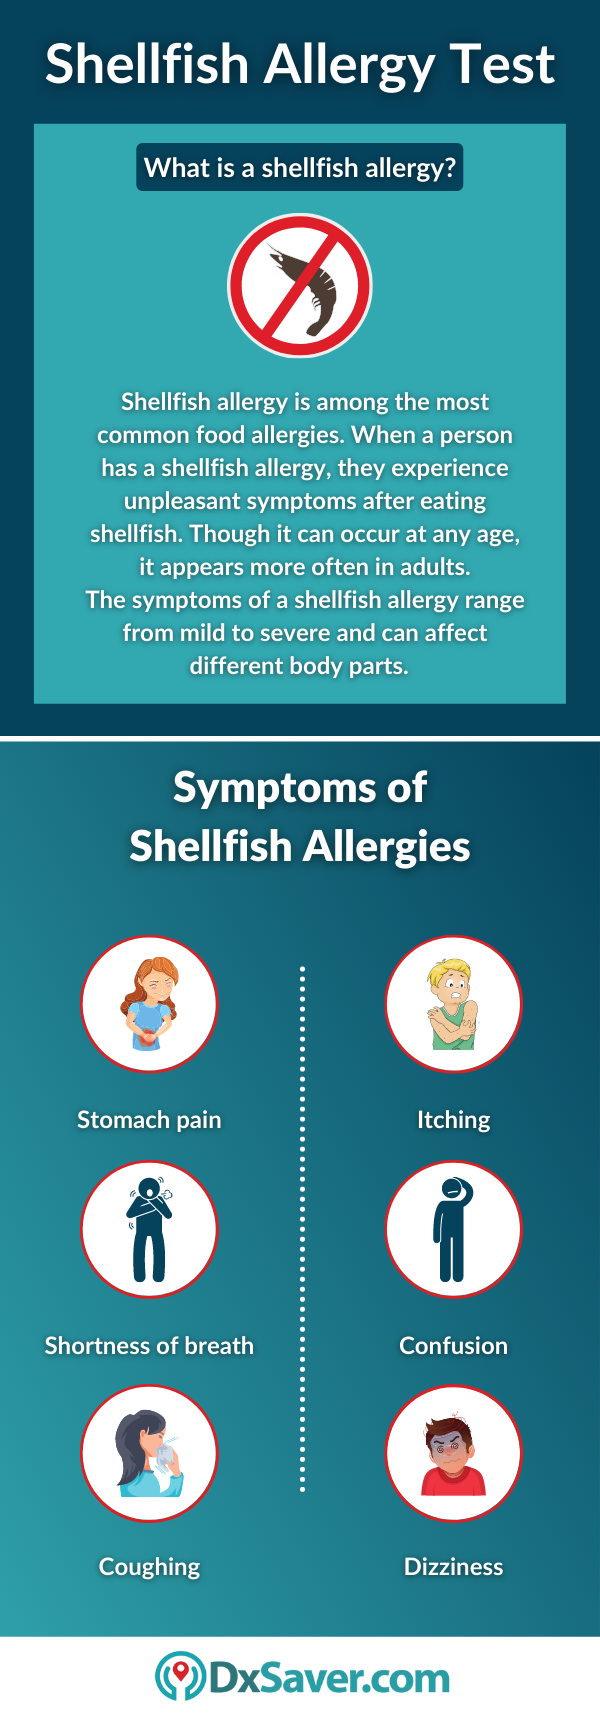 Shellfish Allergy Test and Symptoms of Shellfish Allergy